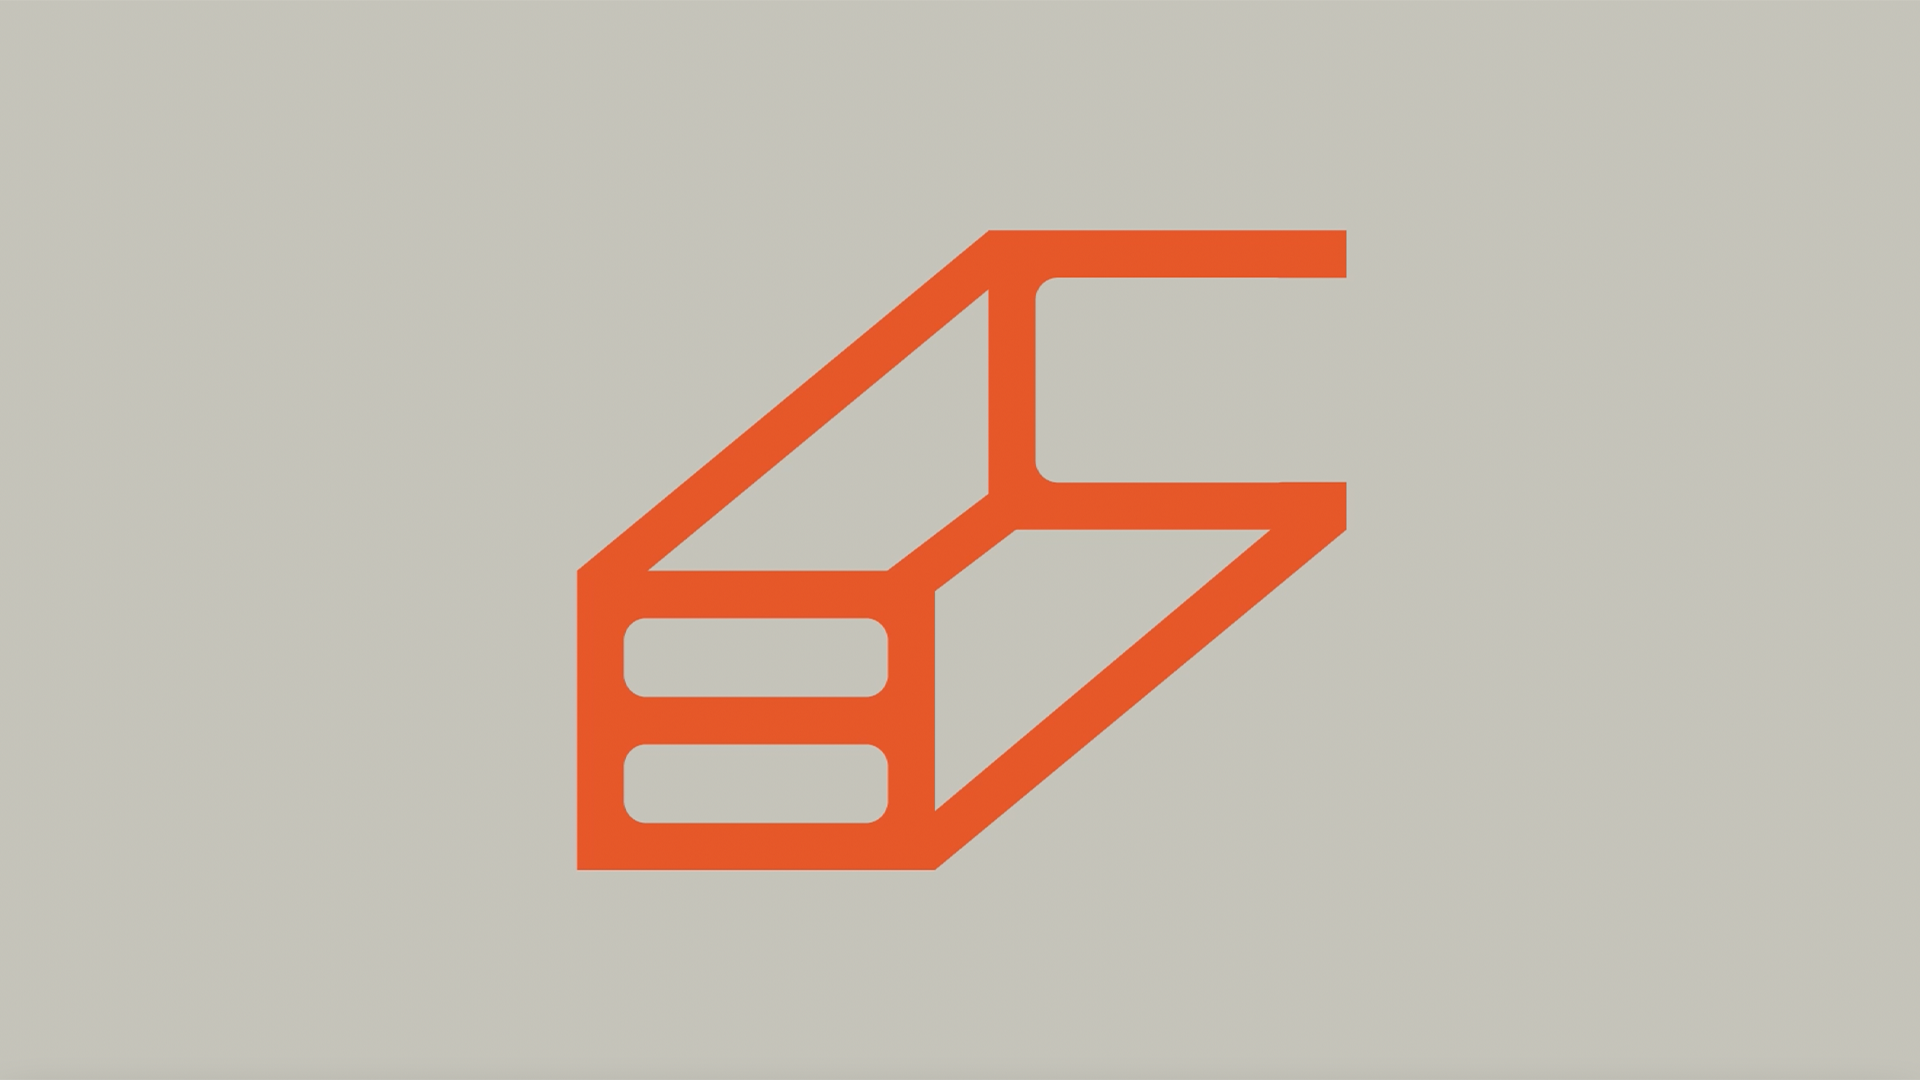 Explainer video for Barbican Centre rebrand concept by Eoin O'Kramer. Thumbnail has orange 'BC' Barbican Centre logo on grey background.